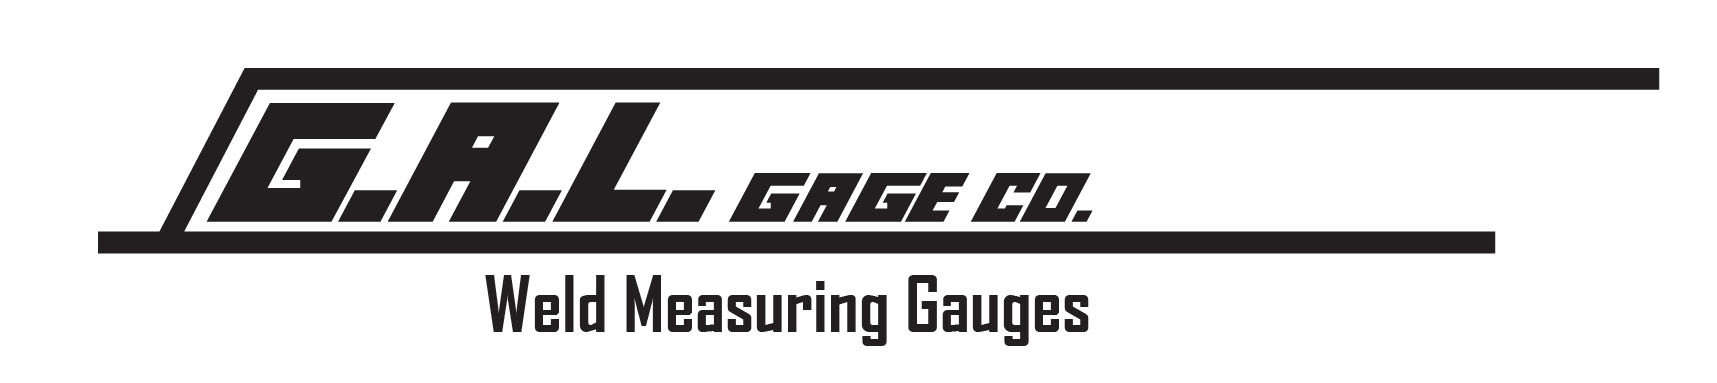 G.A.L. GAGE CO